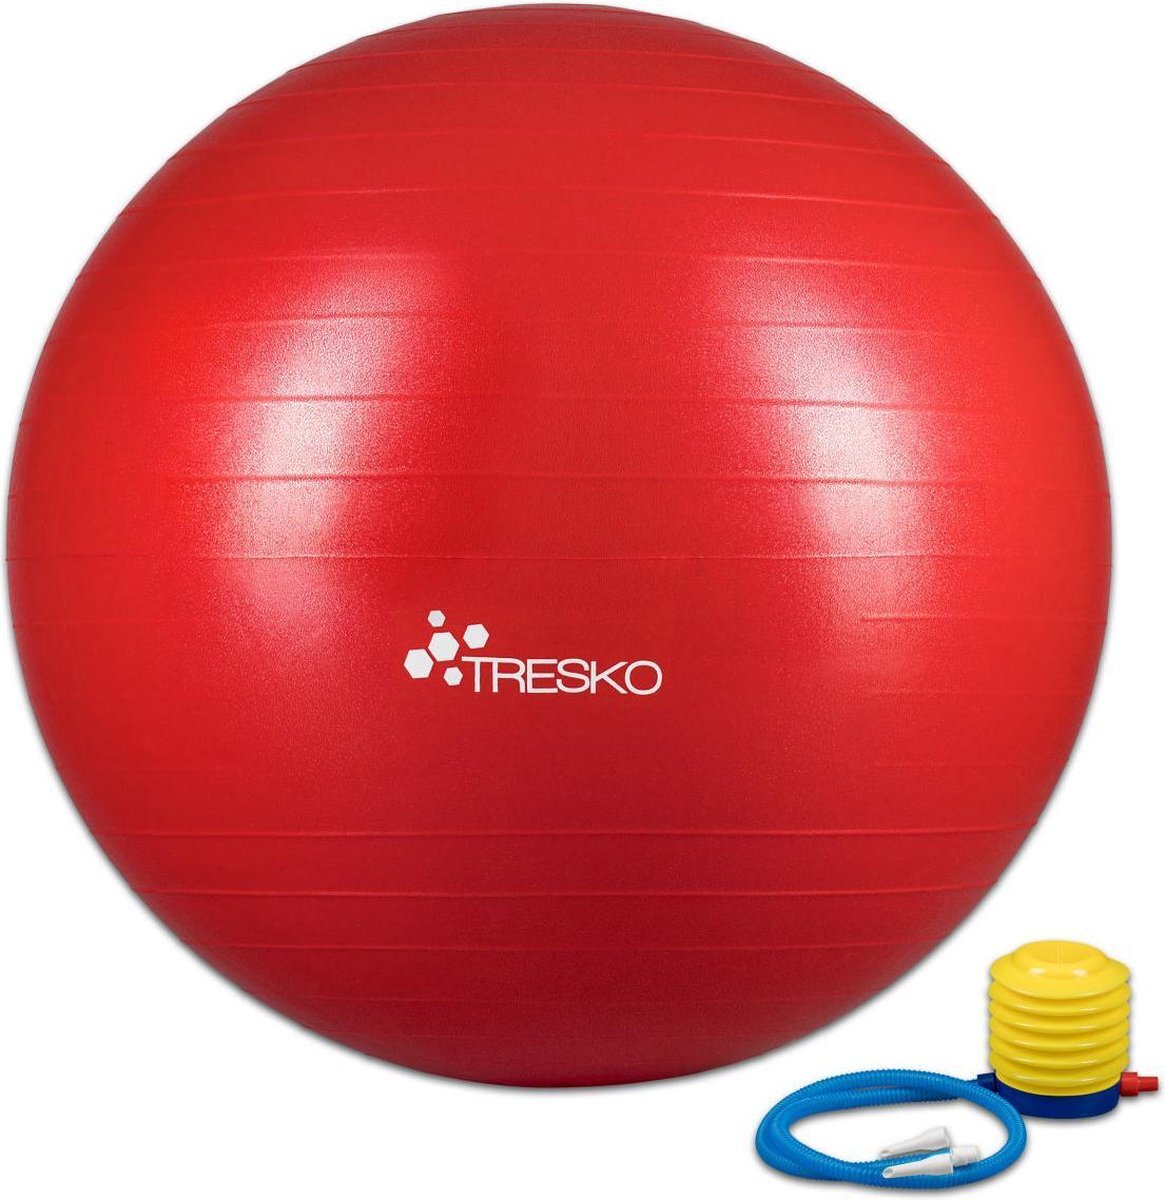 Tresko Fitnessbal met pomp - diameter 65 cm - Rood